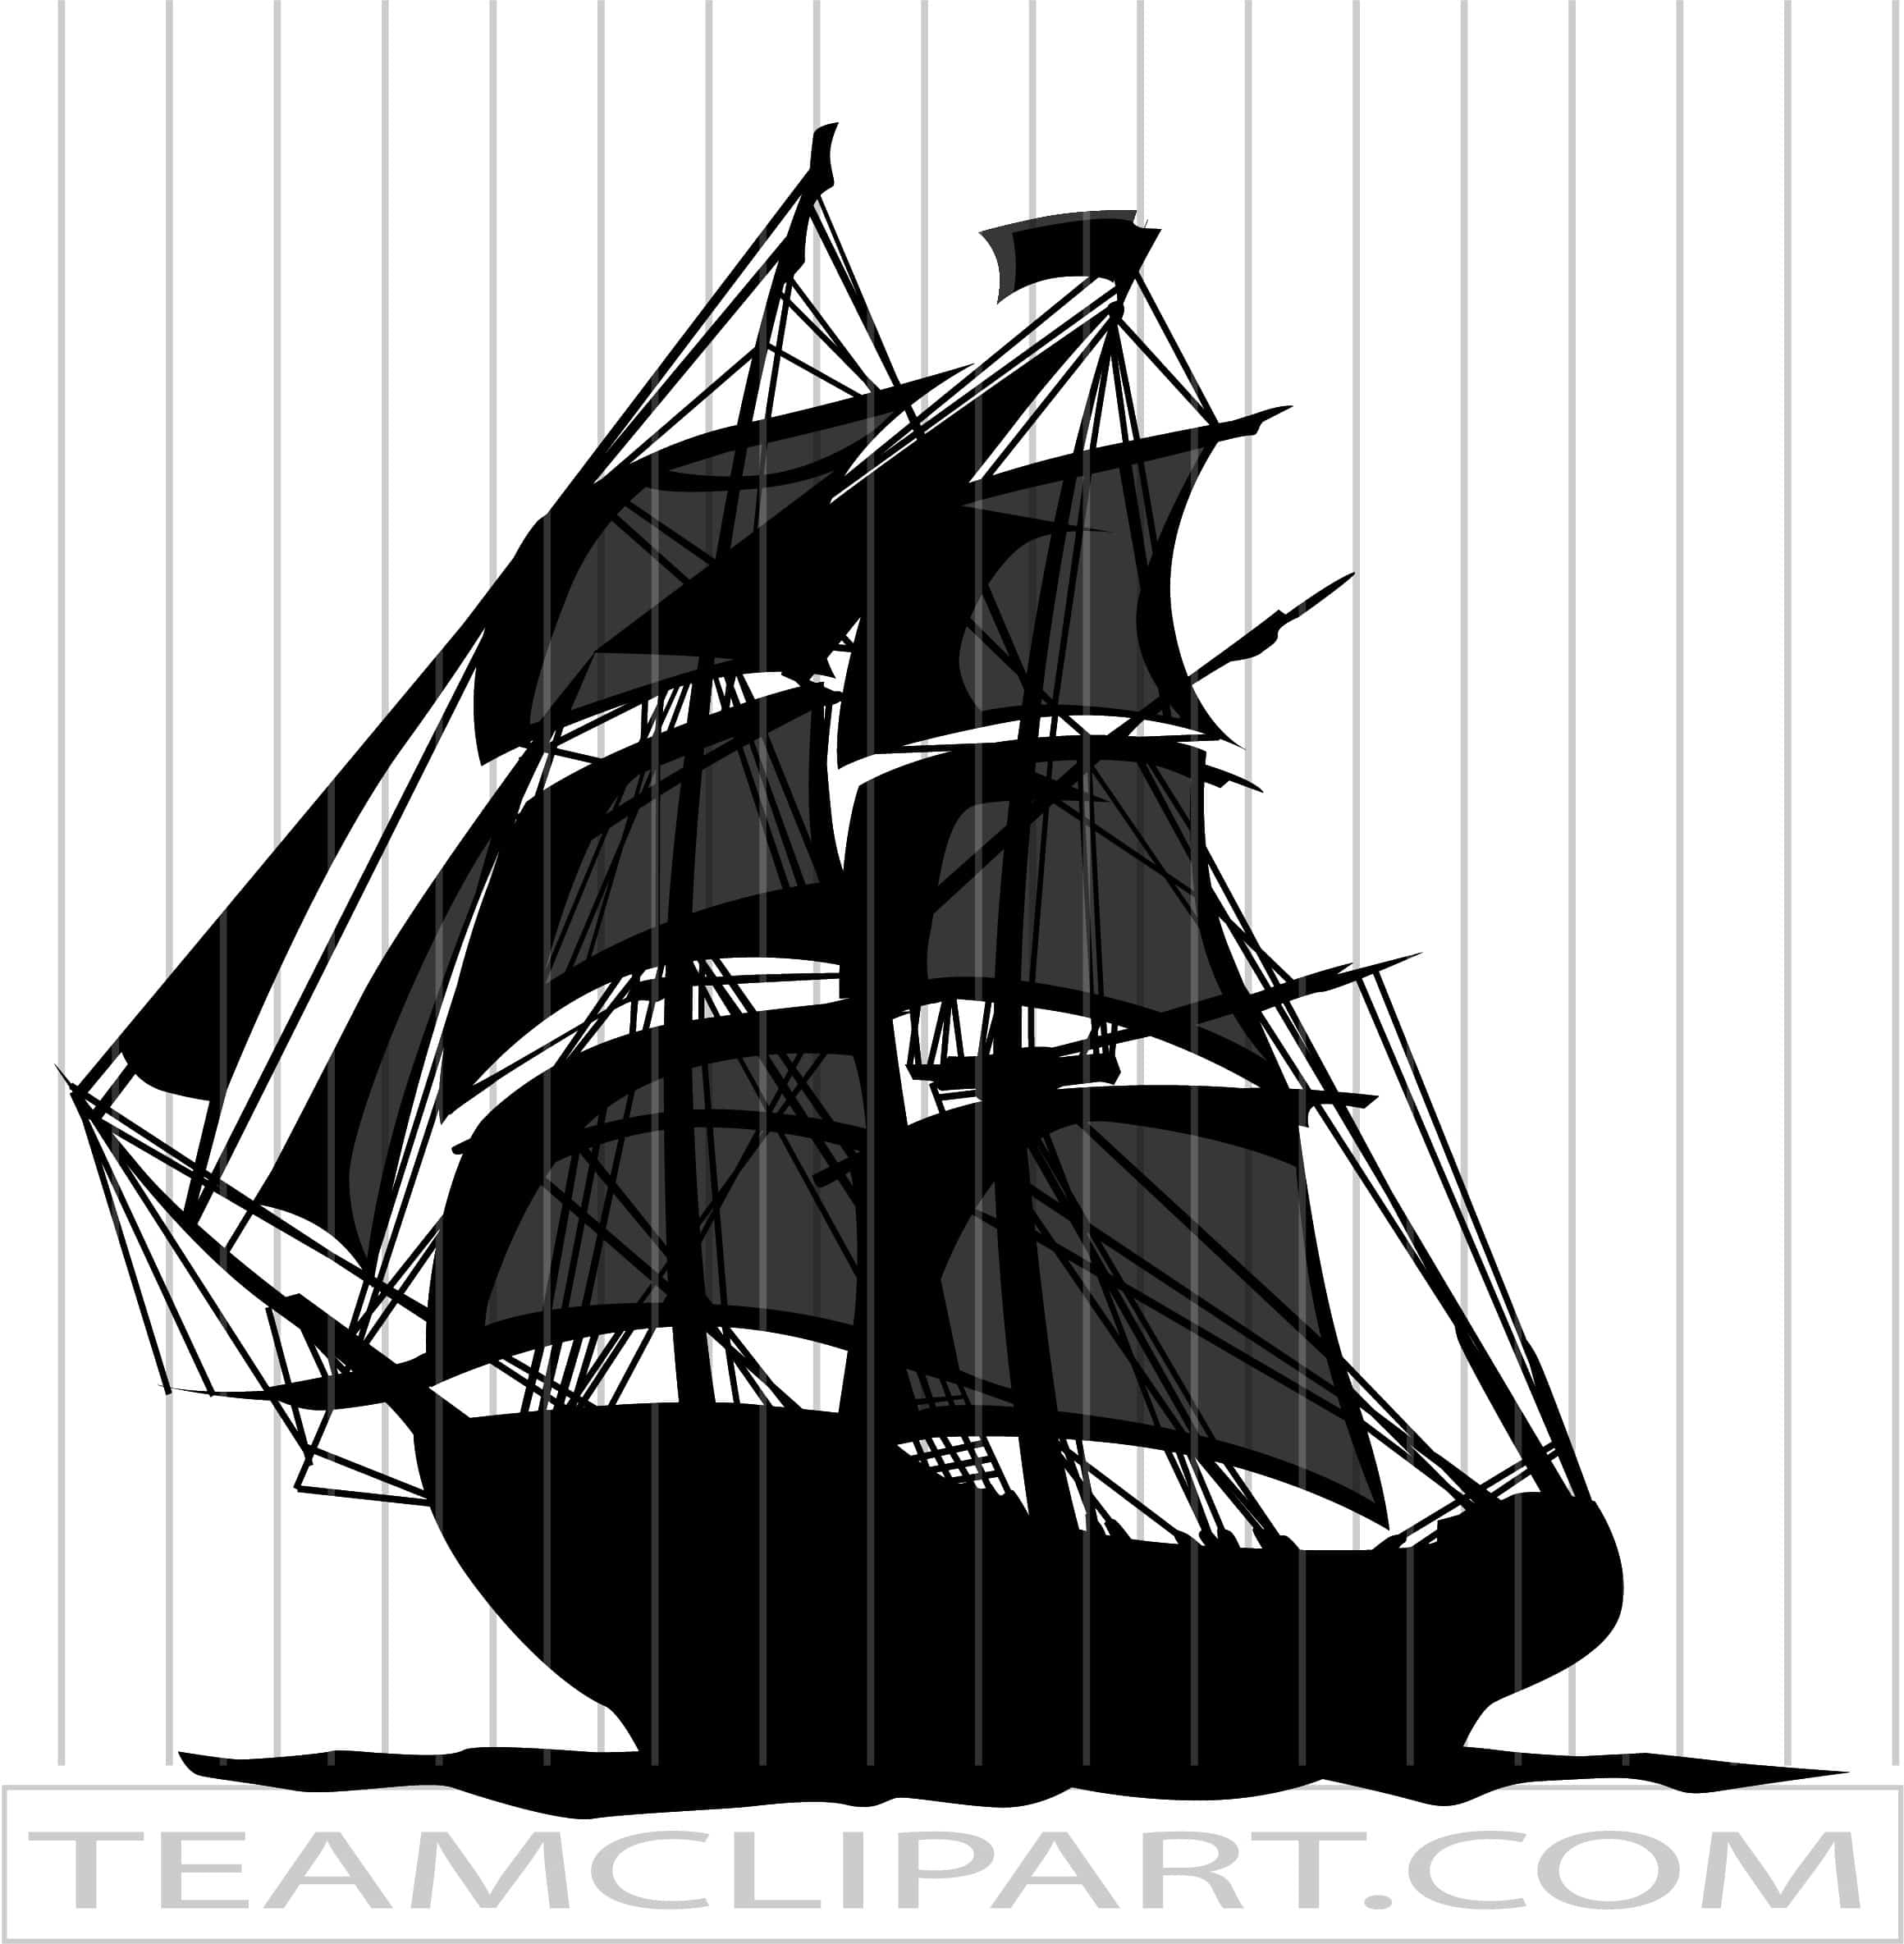 Pirate Clipart, Pirate Graphics & Illustrations, Pirate Ship